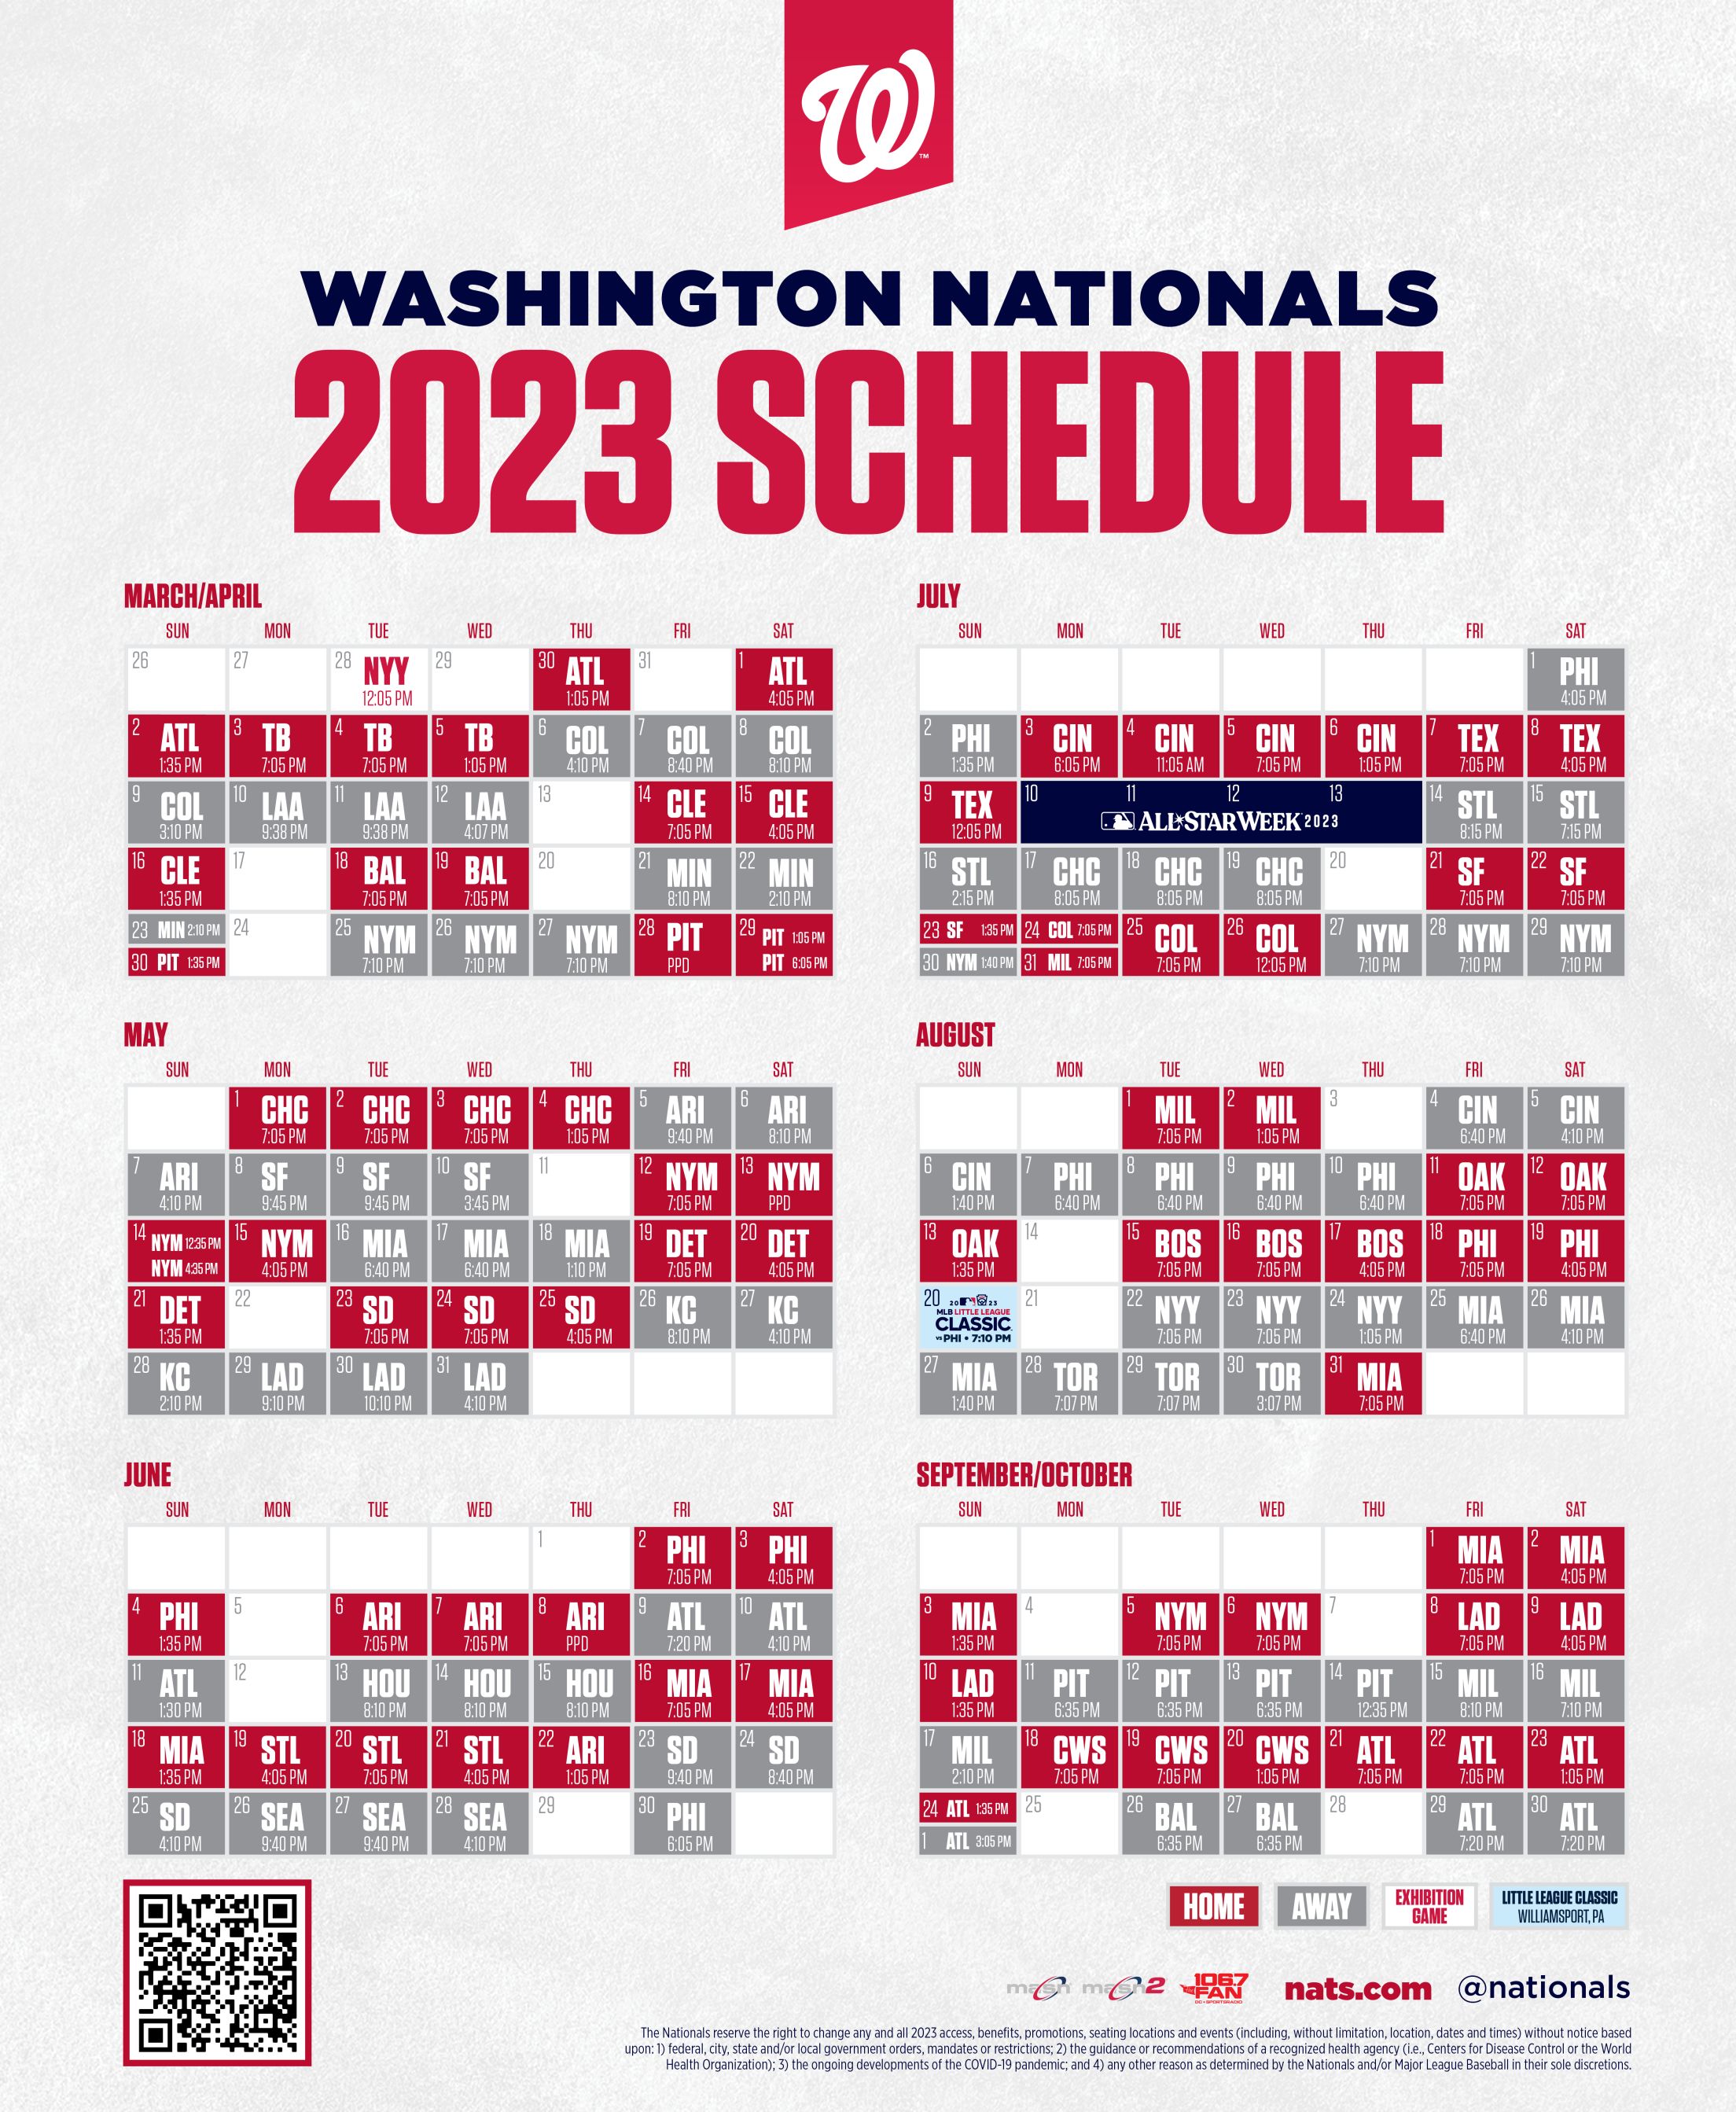 Washington Nationals' 2023 Regular Season Schedule